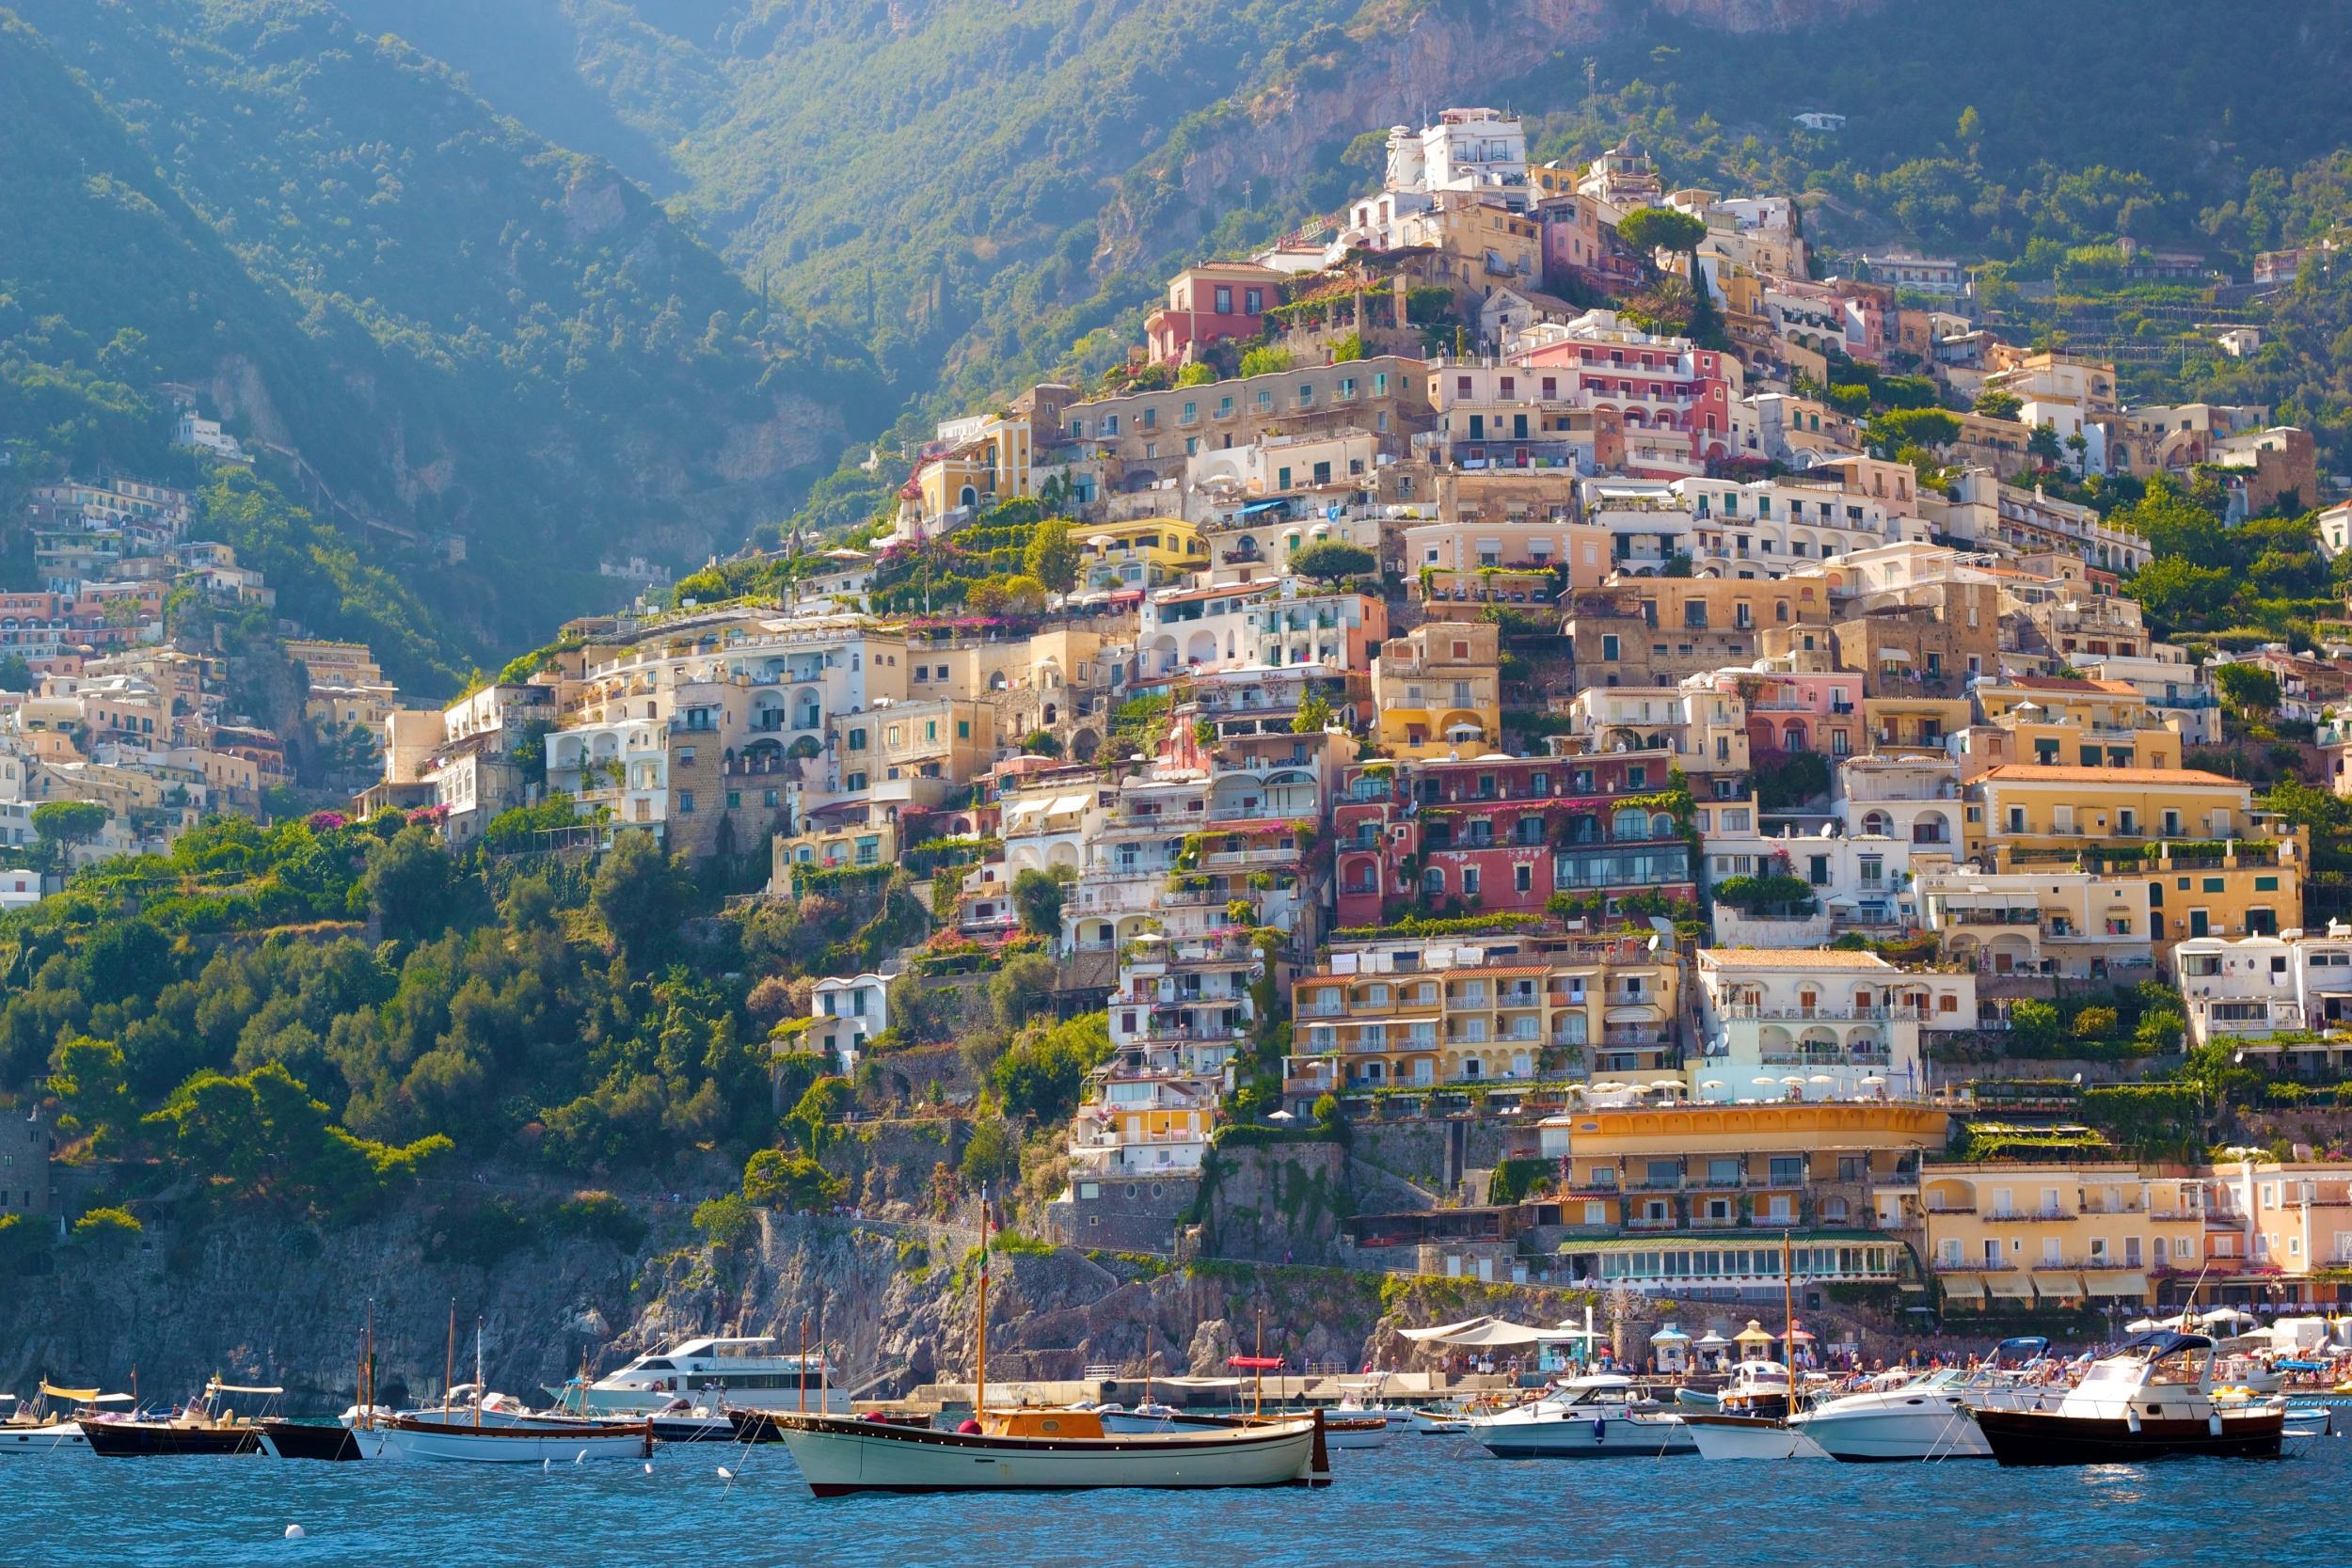 Colourful houses cascade down the hillsides of Amalfi